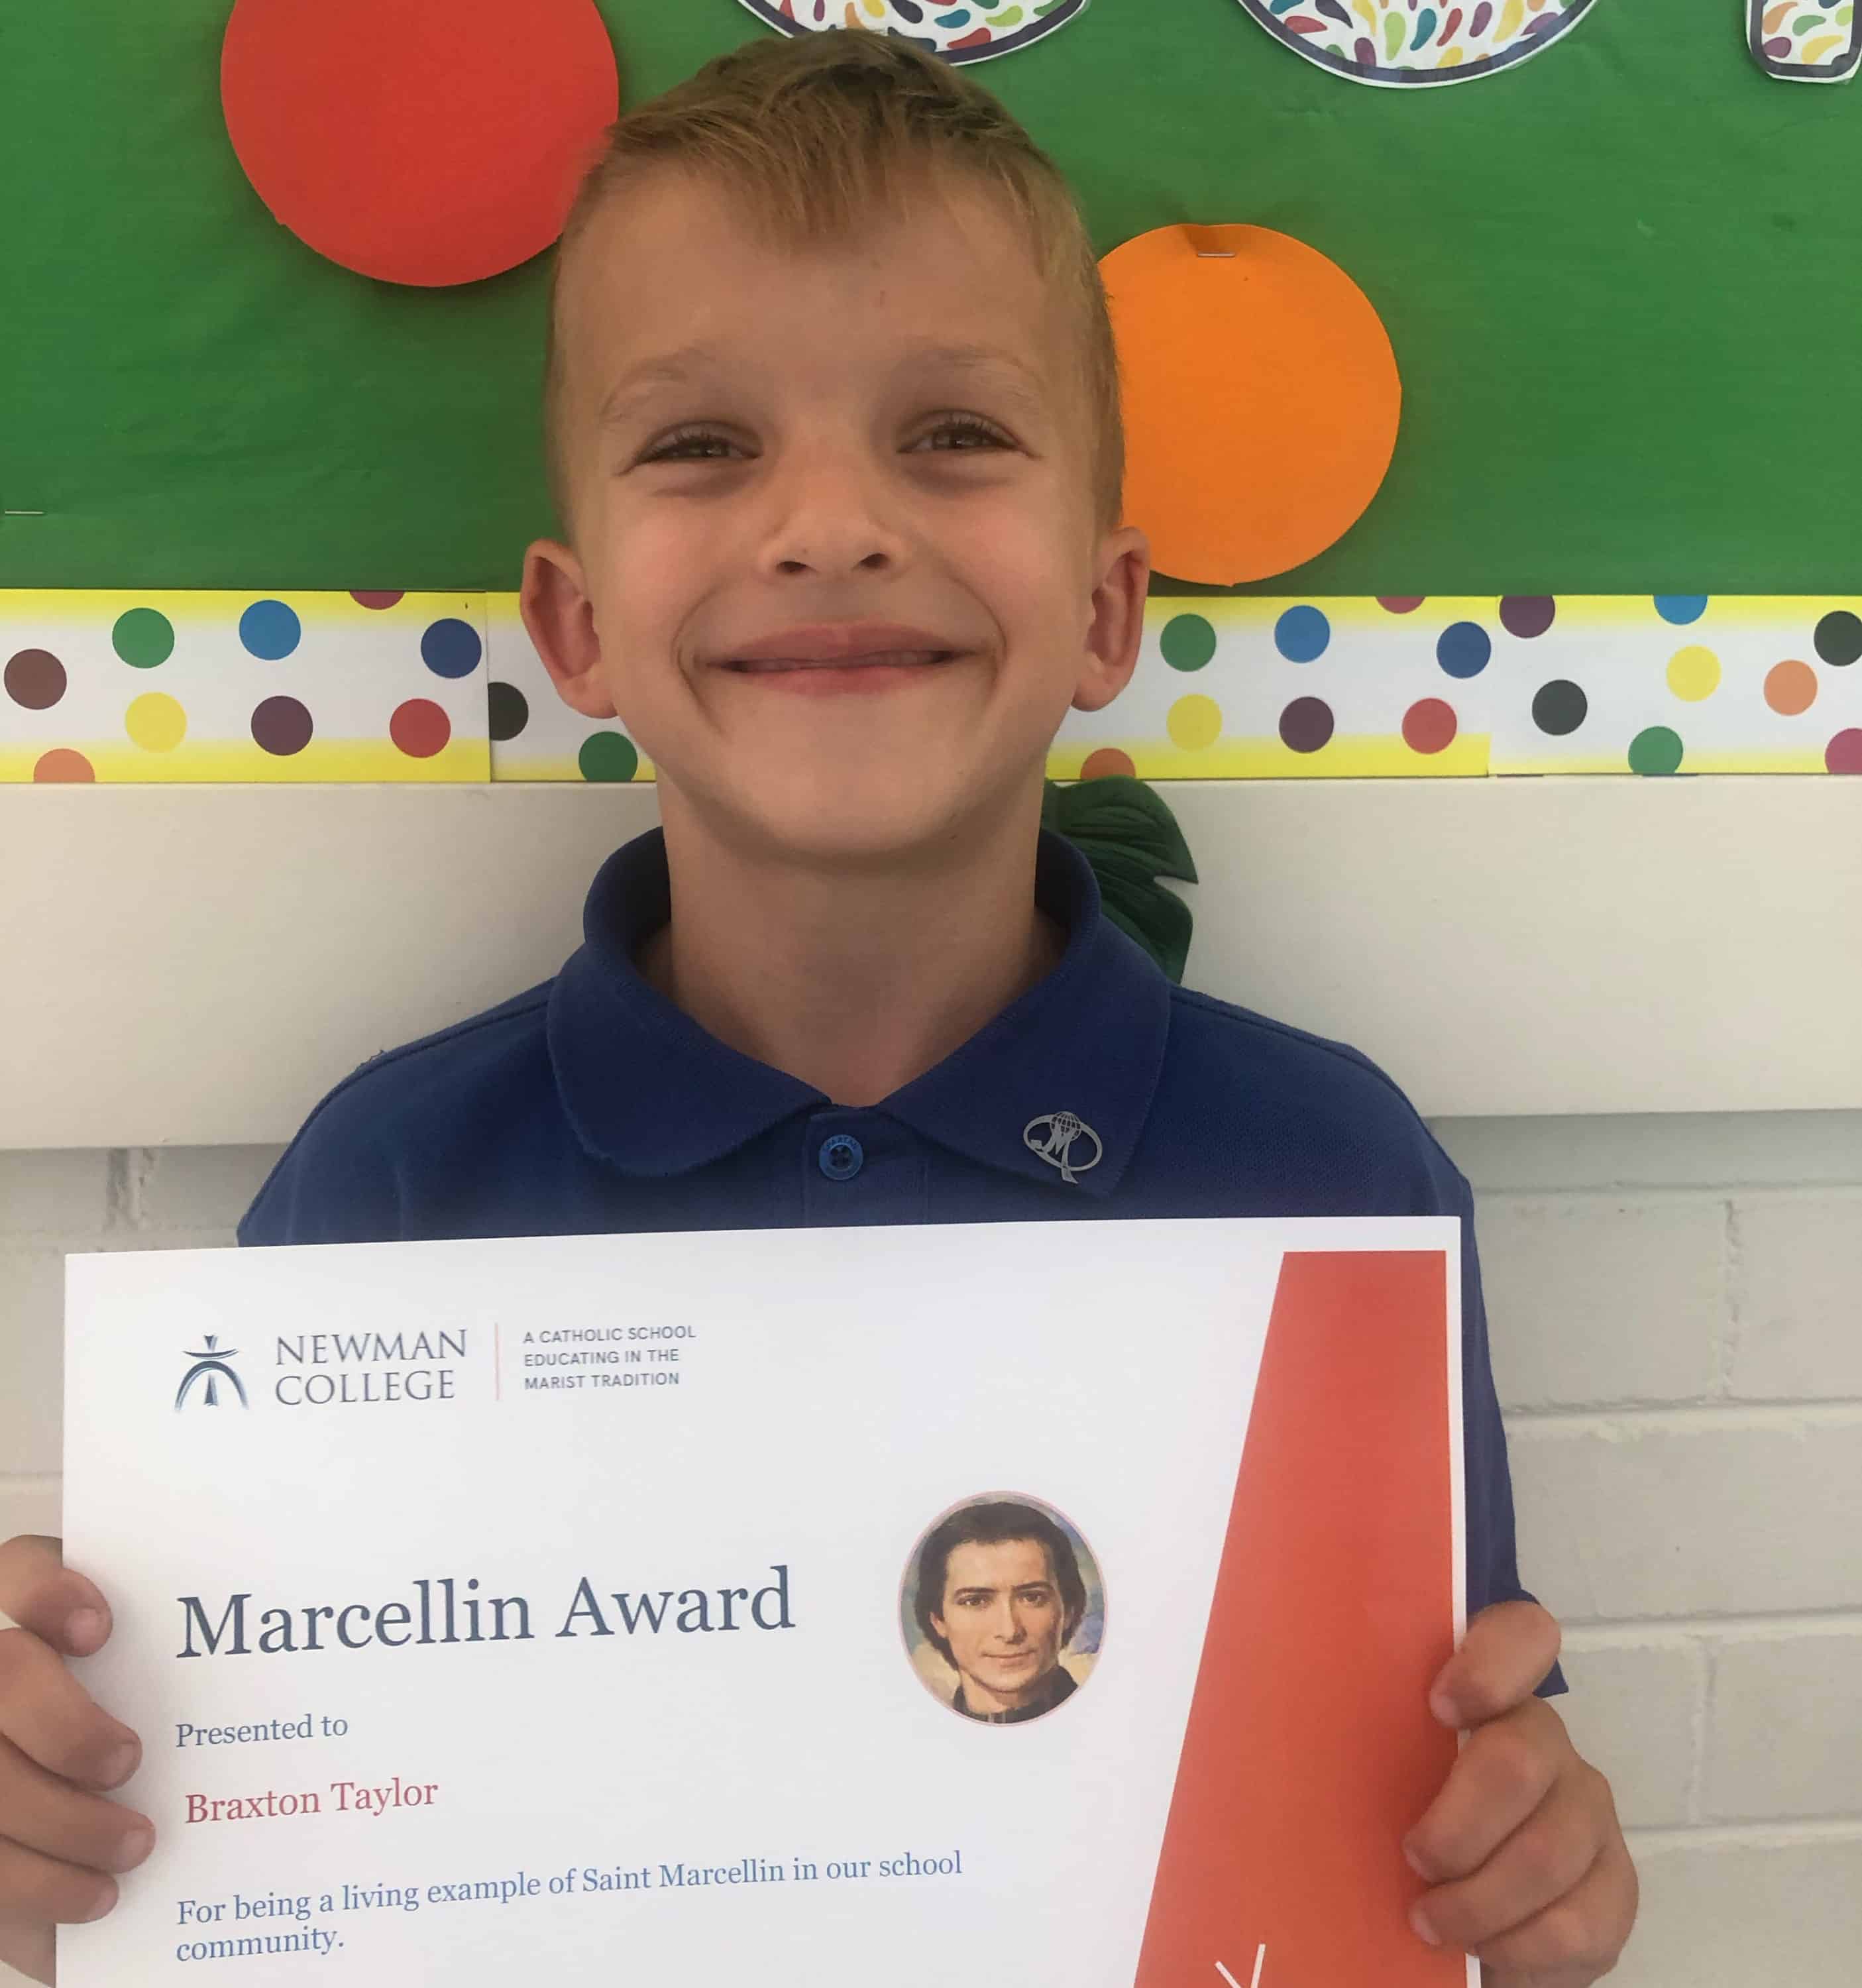 Marcellin Award